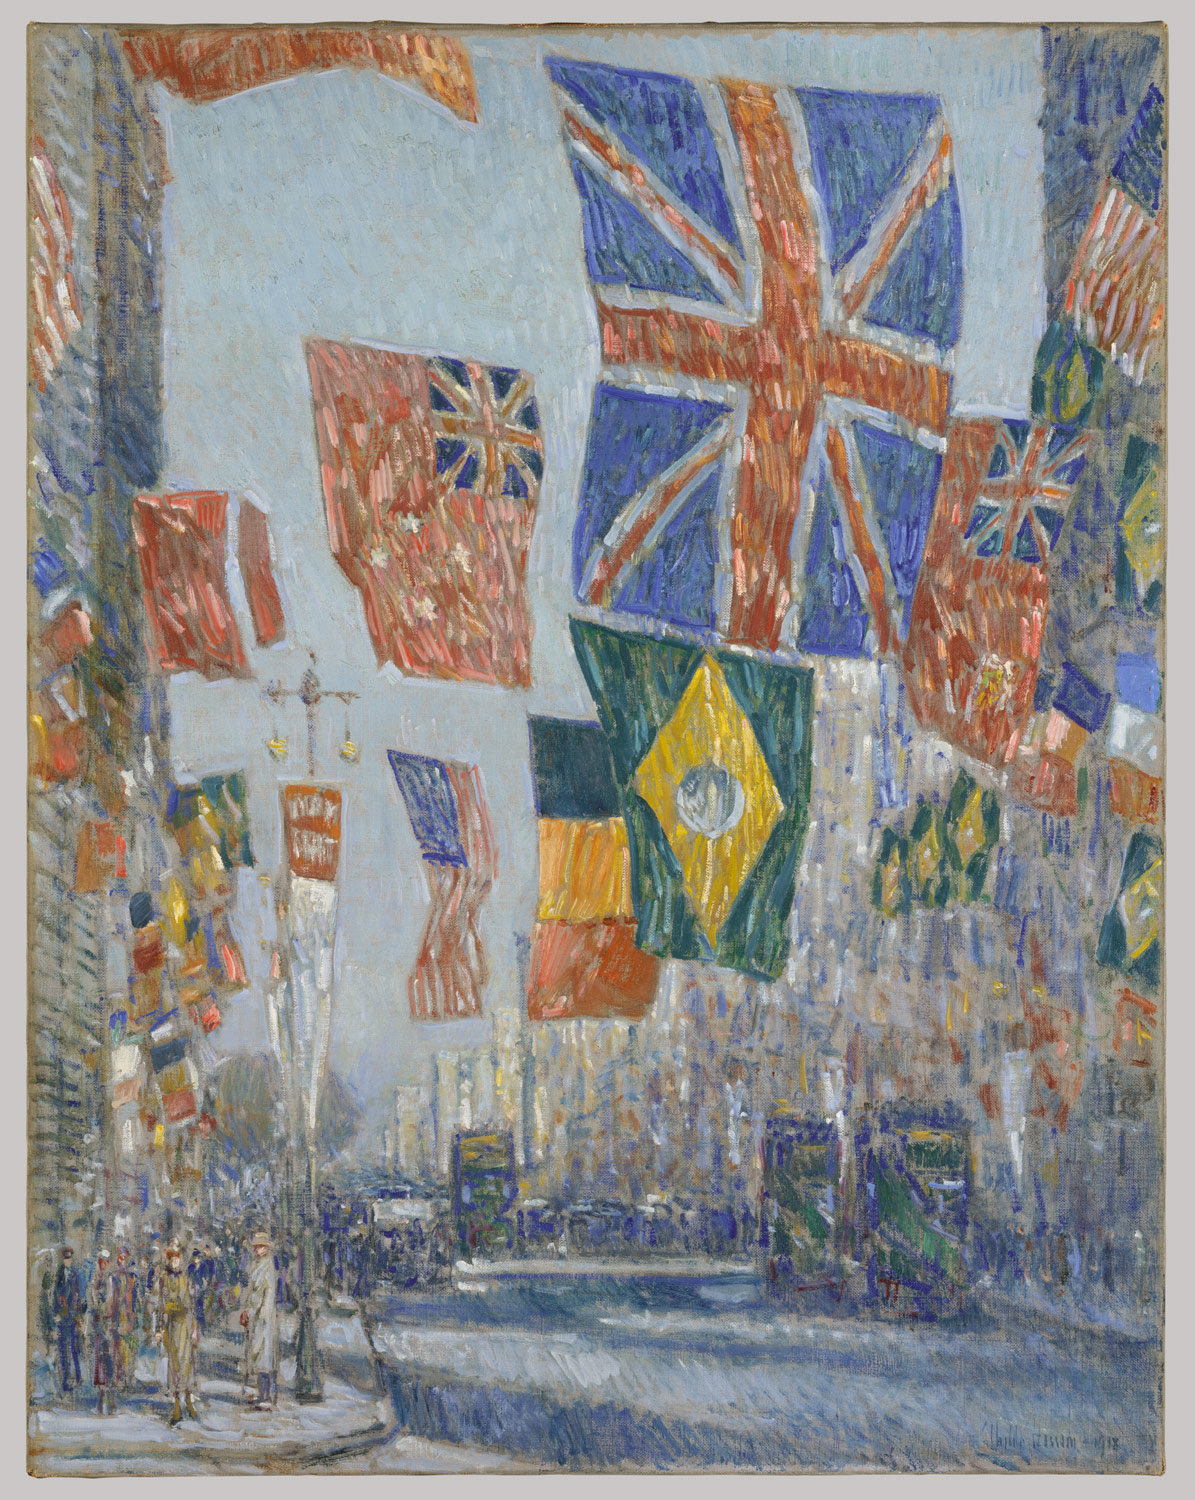 American Impressionist Child Hassam painted numerous patriotic views of New York's Fifth Avenue. Metropolitan Museum.